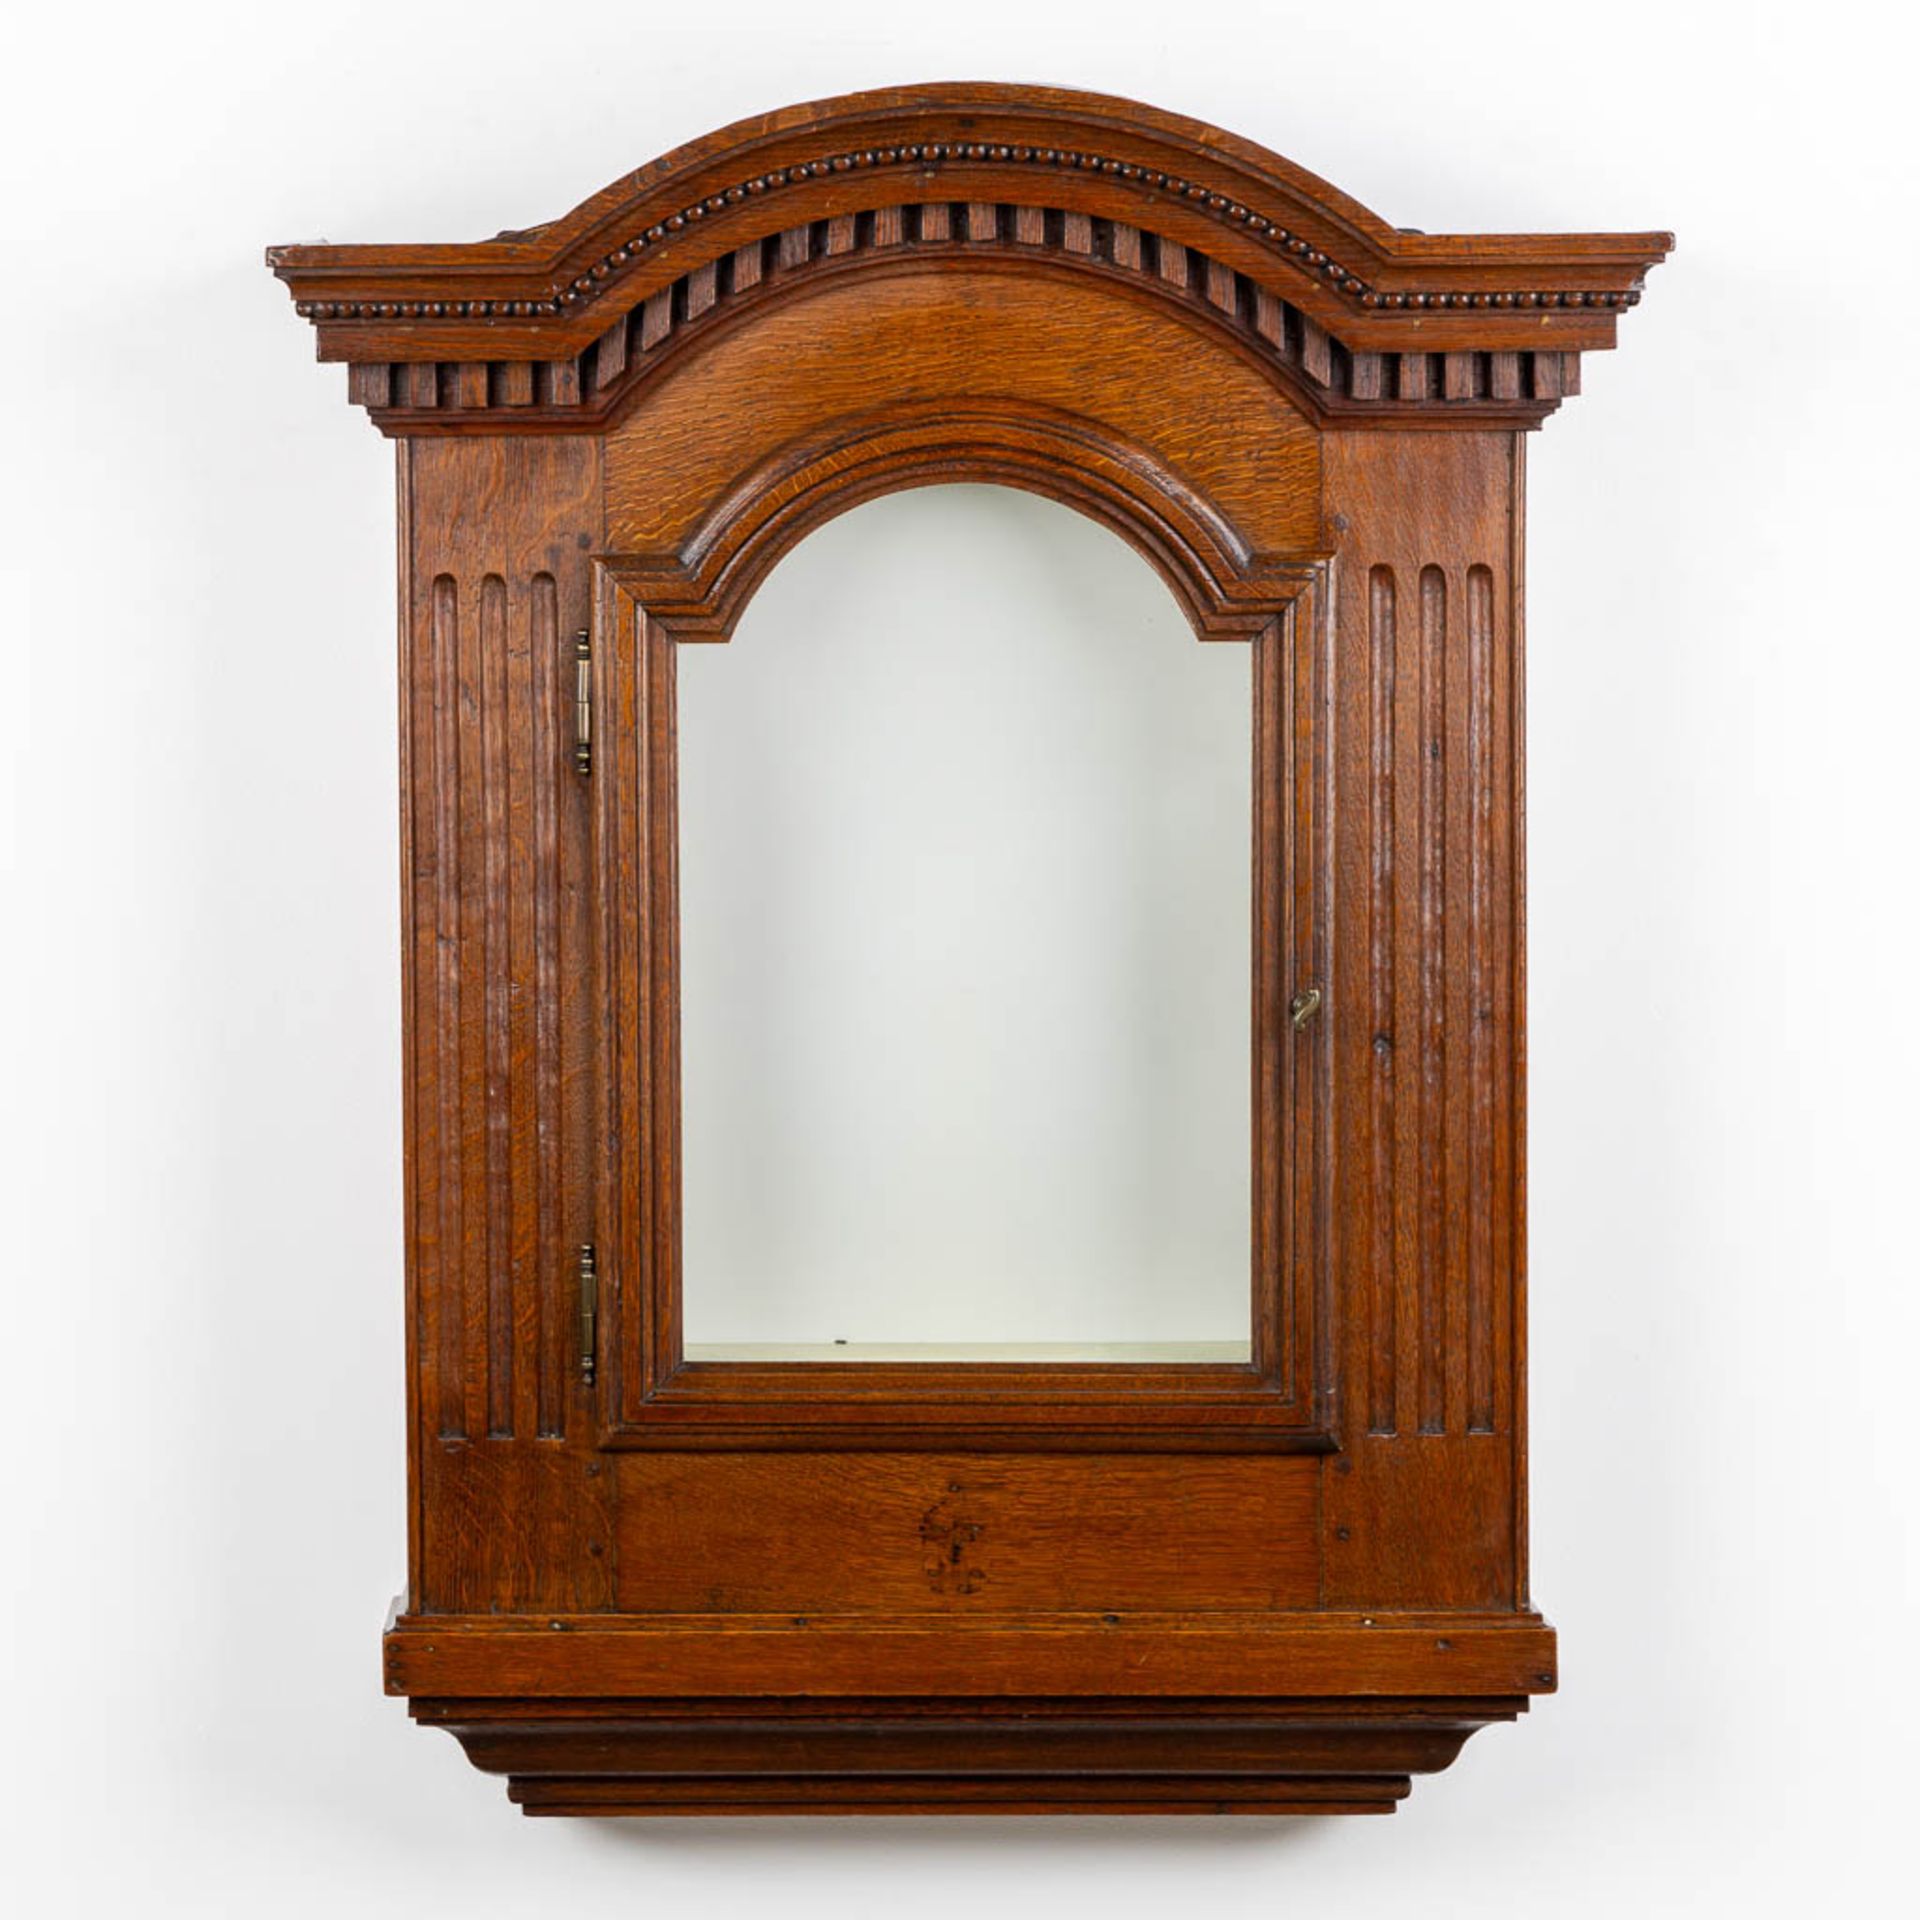 A small wall-mounted display cabinet, Oak, 19th C. (L:23 x W:75 x H:96 cm)